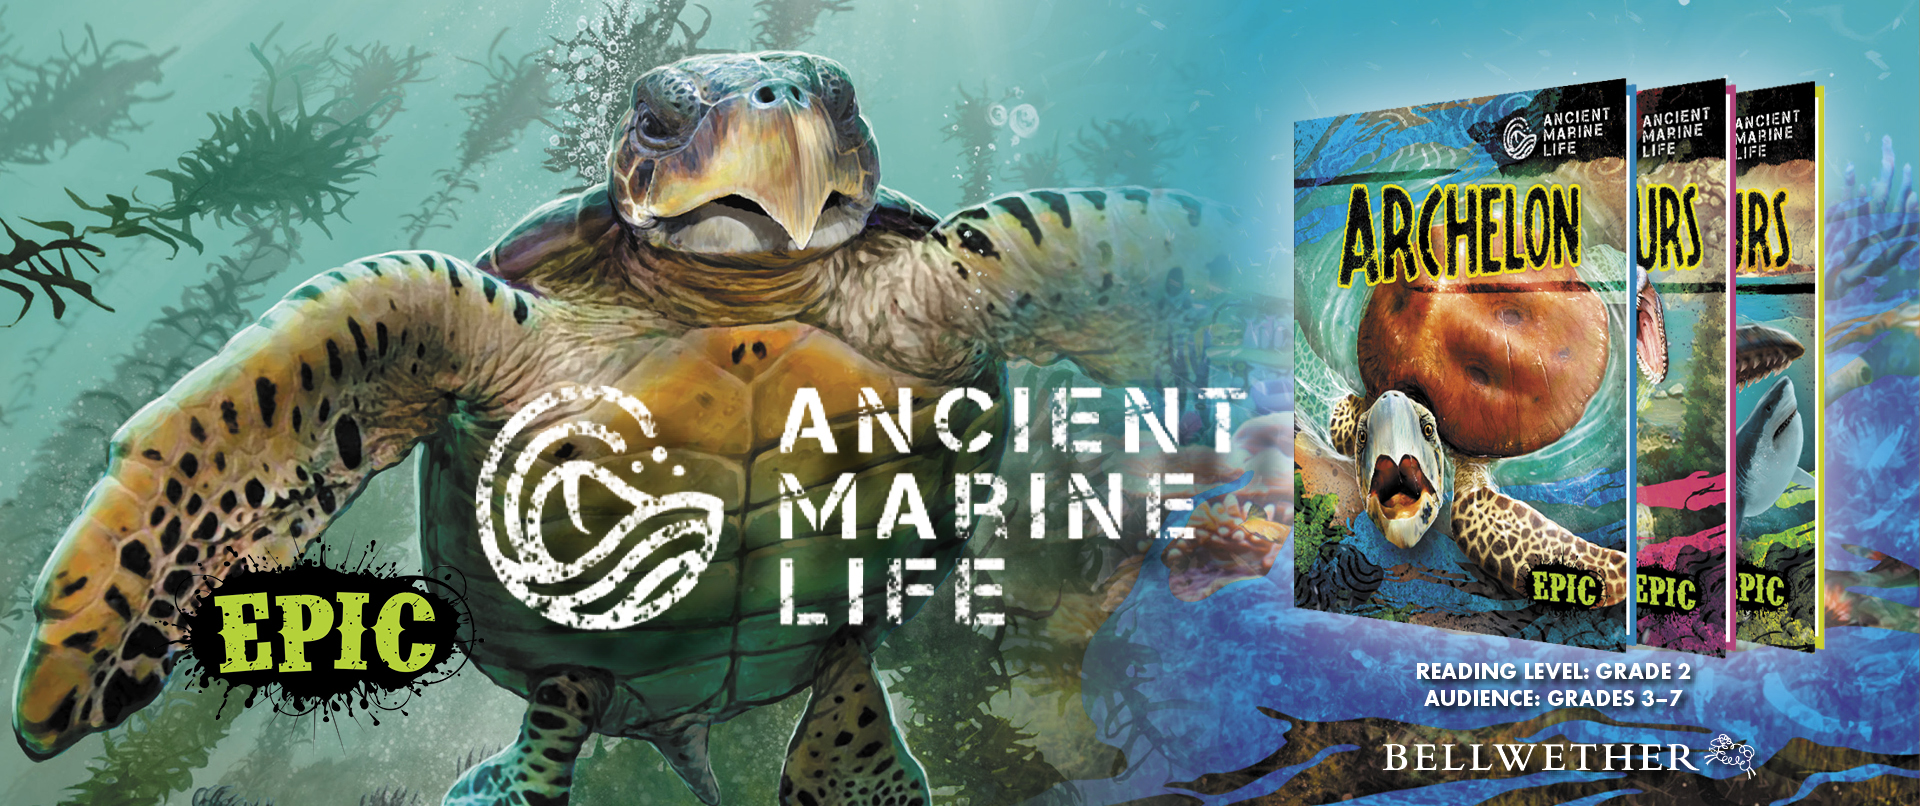 Ancient Marine Life